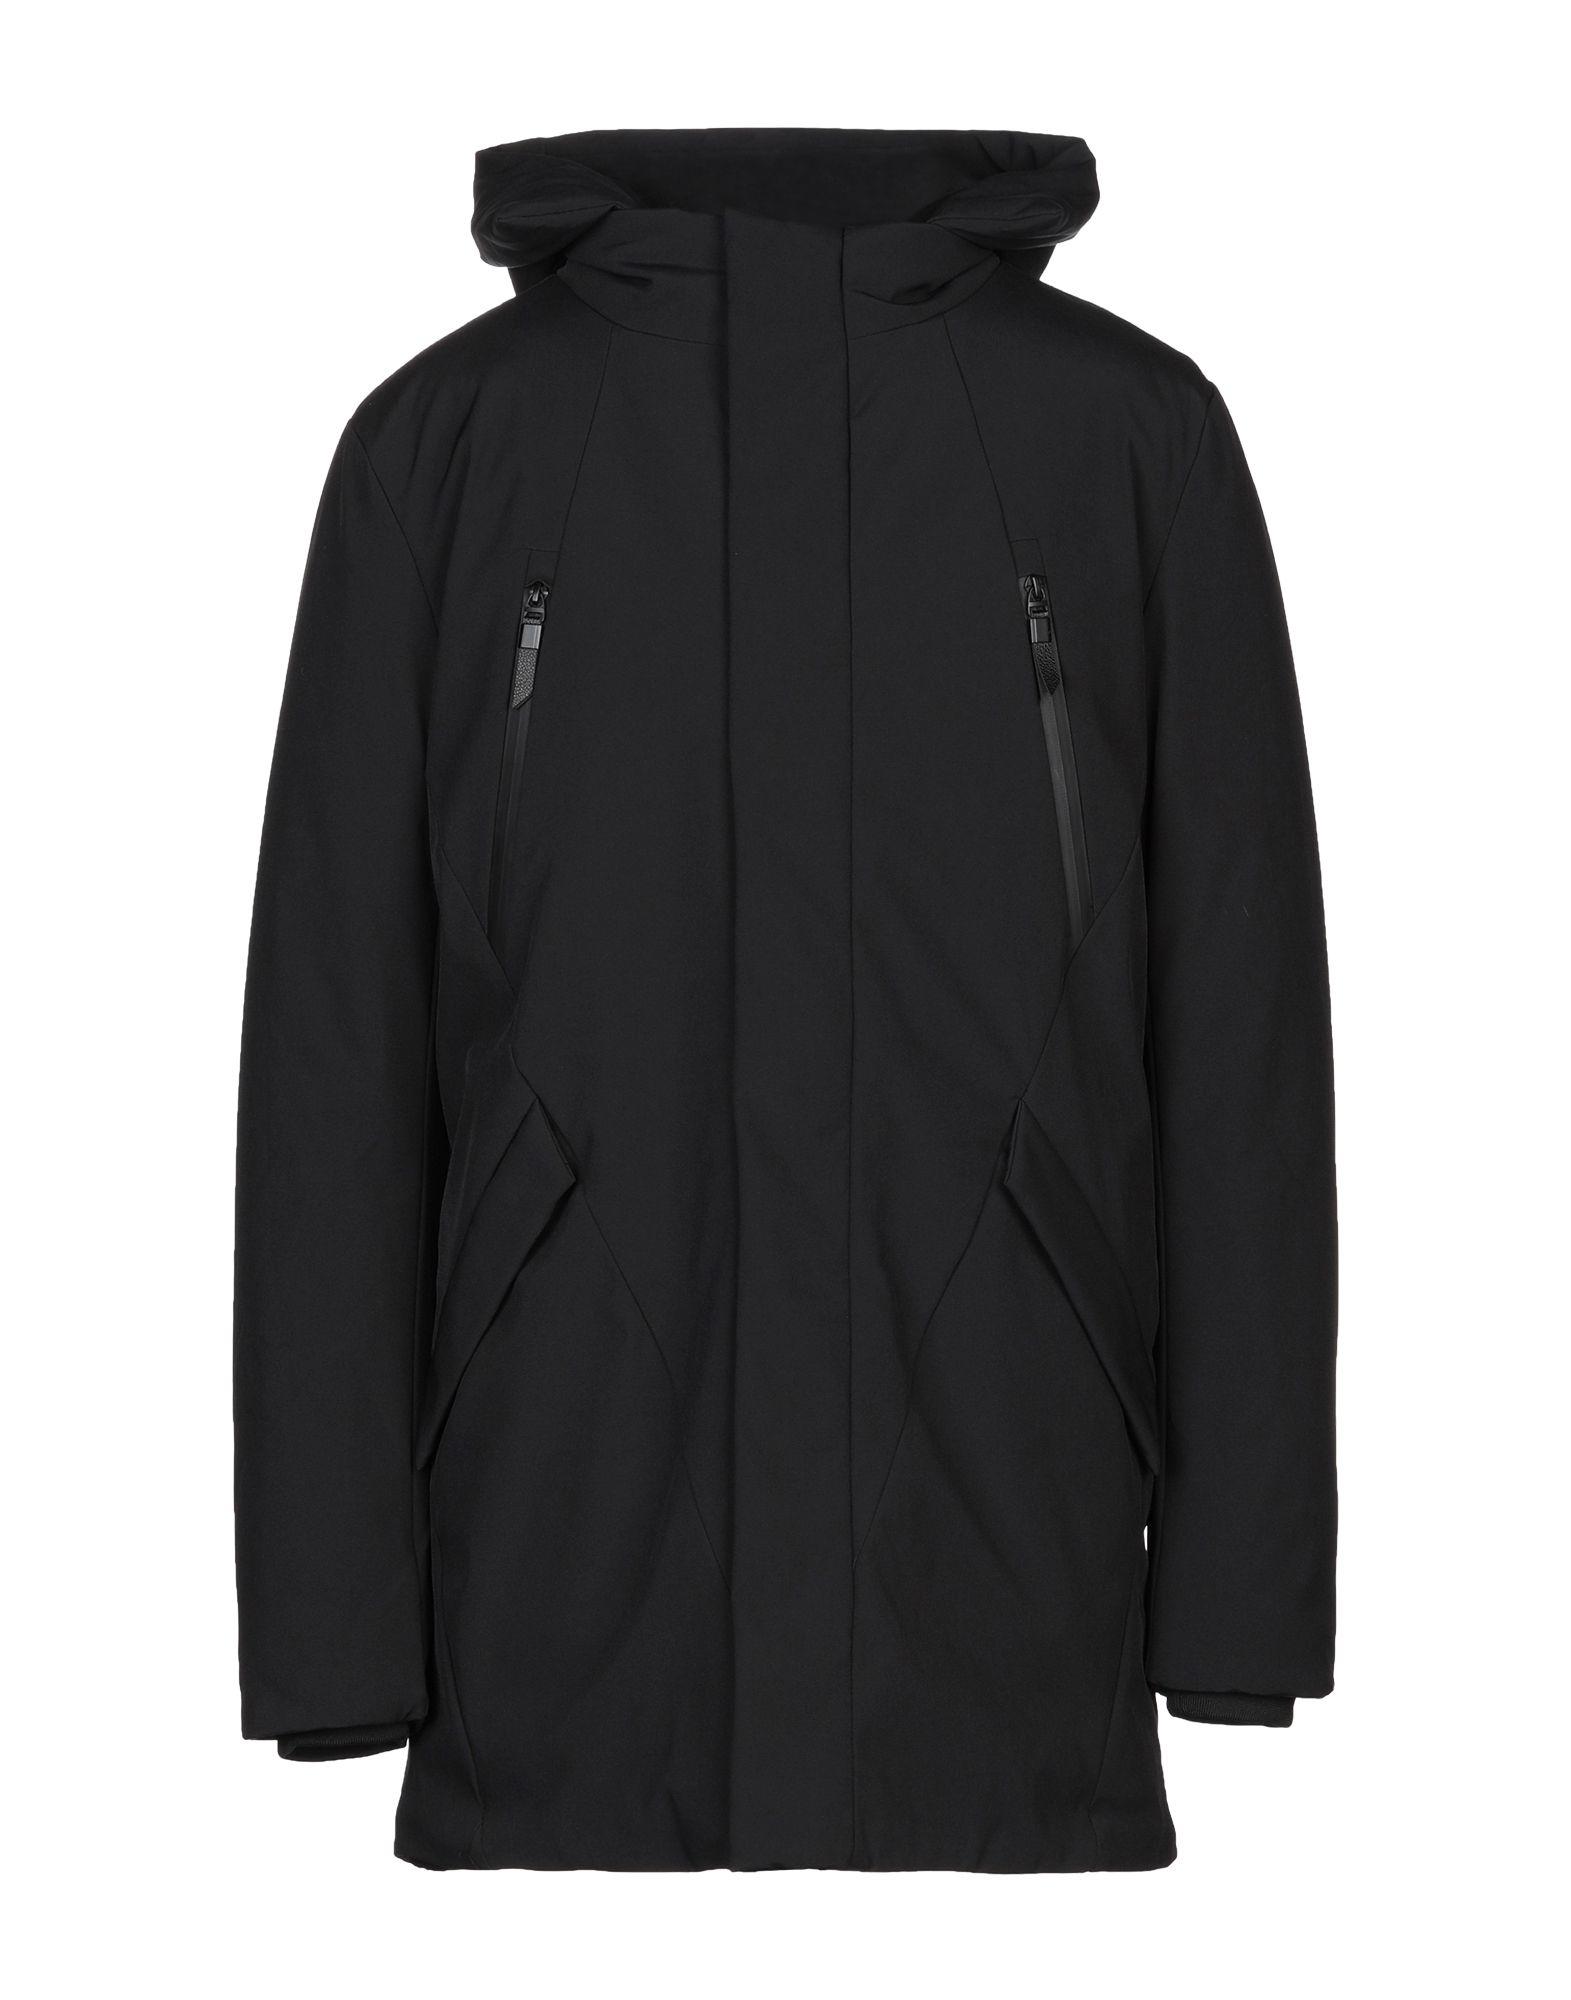 Rino & Pelle Synthetic Jacket in Black for Men - Lyst